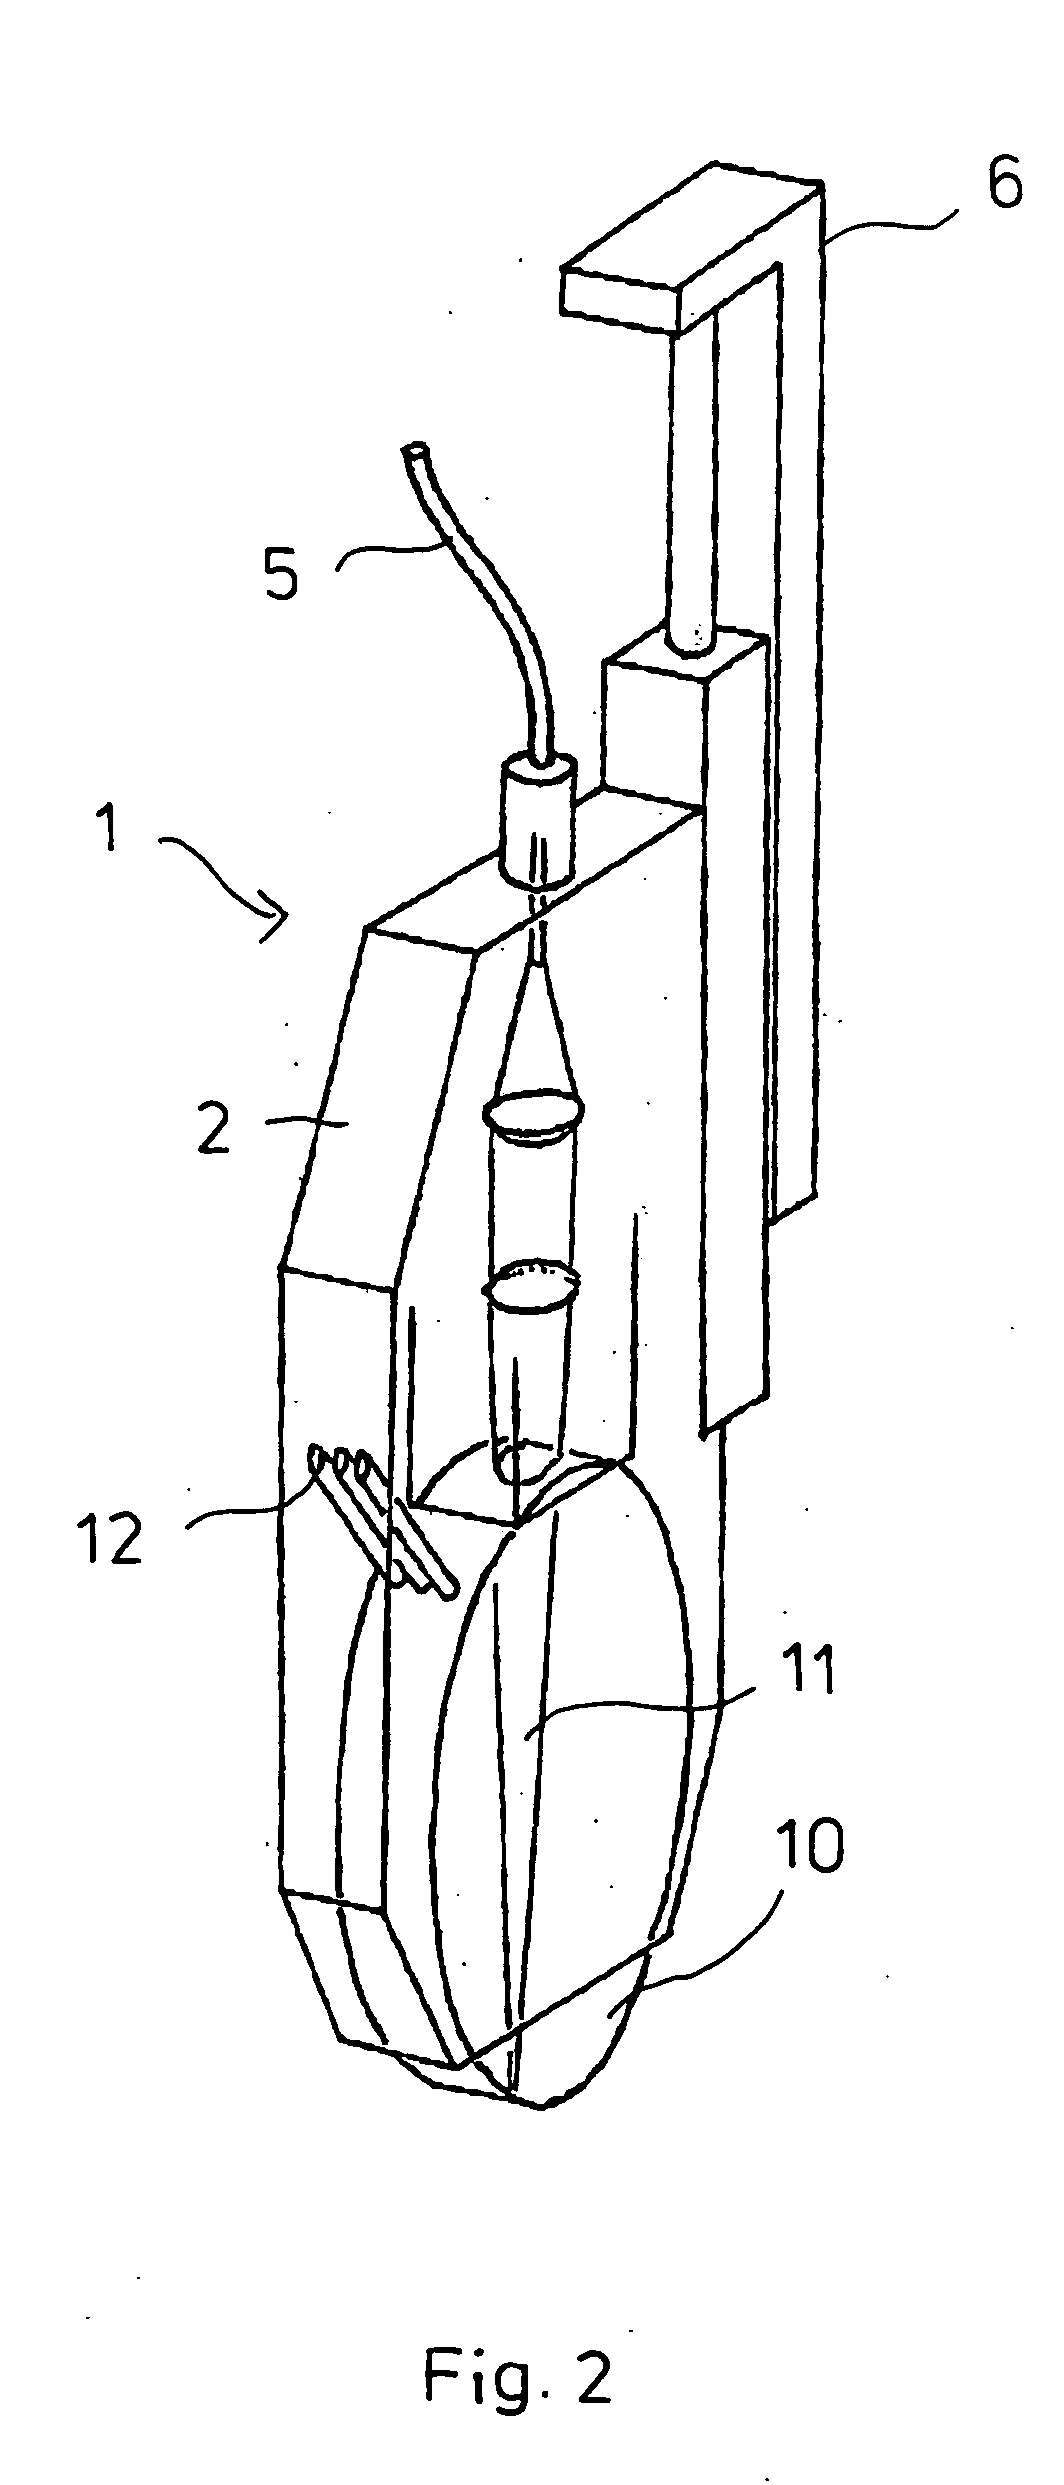 Apparatus for connecting planar plastic materials